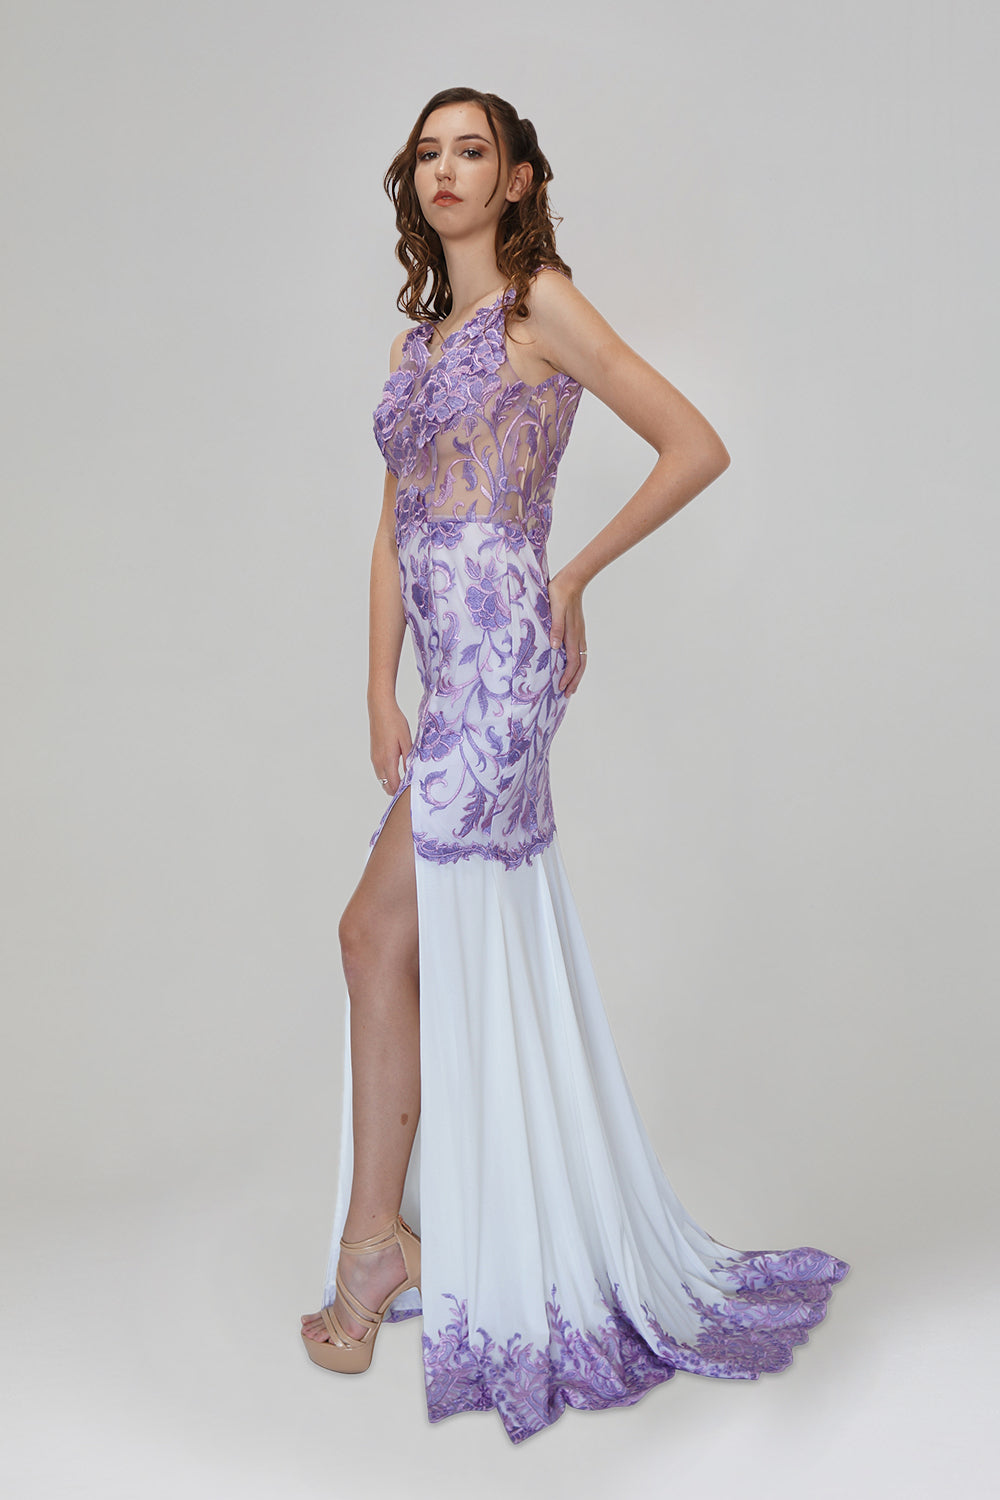 custom purple lilac illusion bridesmaid dresses perth australia envious bridal & formal 